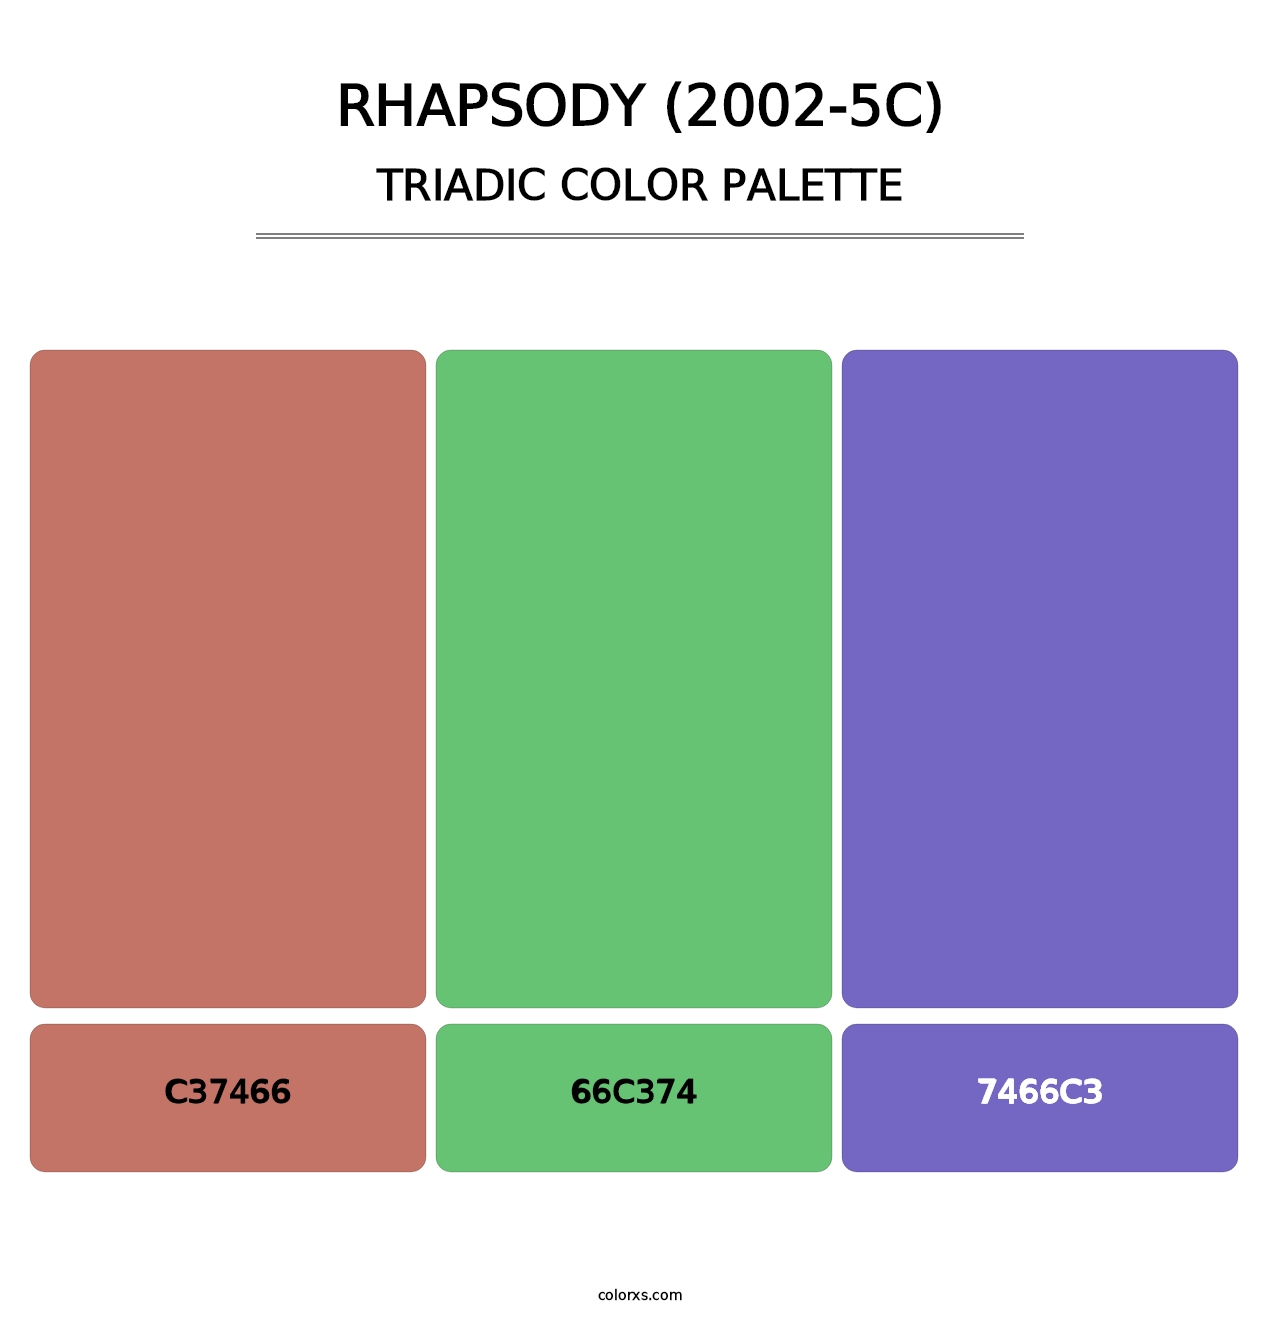 Rhapsody (2002-5C) - Triadic Color Palette